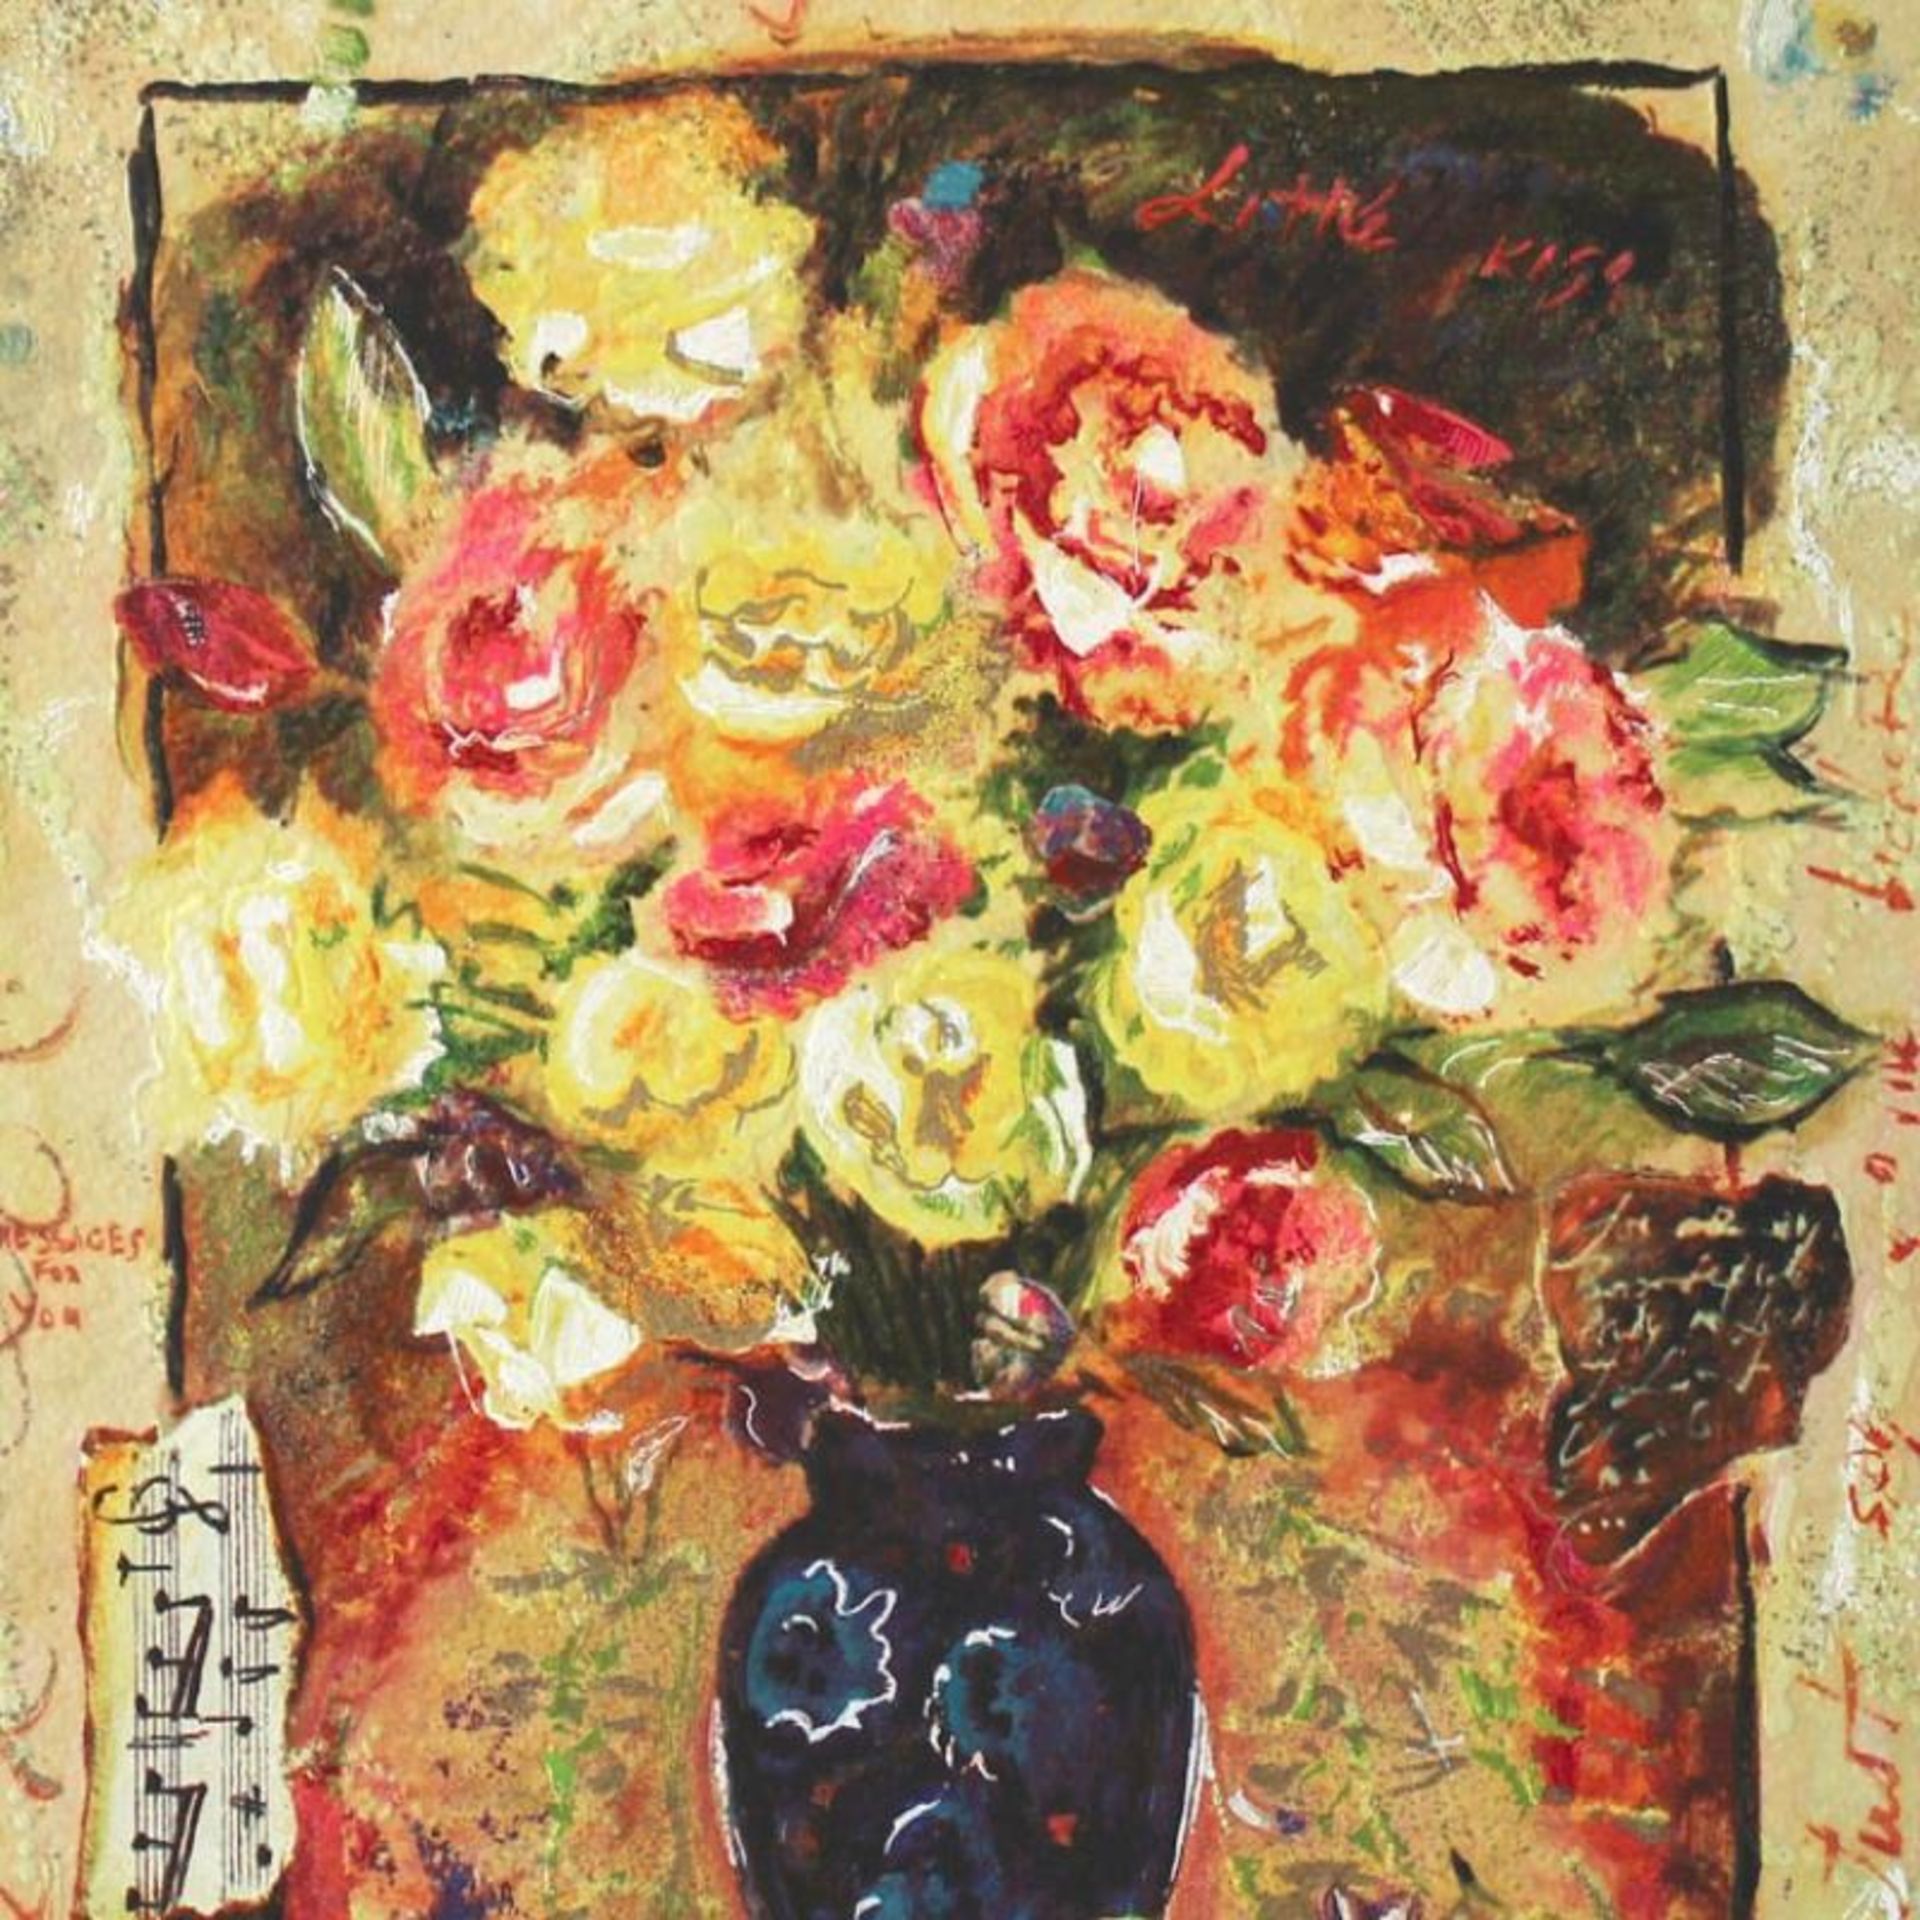 Sergey Kovrigo, "Sunshine Roses" Hand Signed Limited Edition Serigraph with Lett - Image 2 of 2